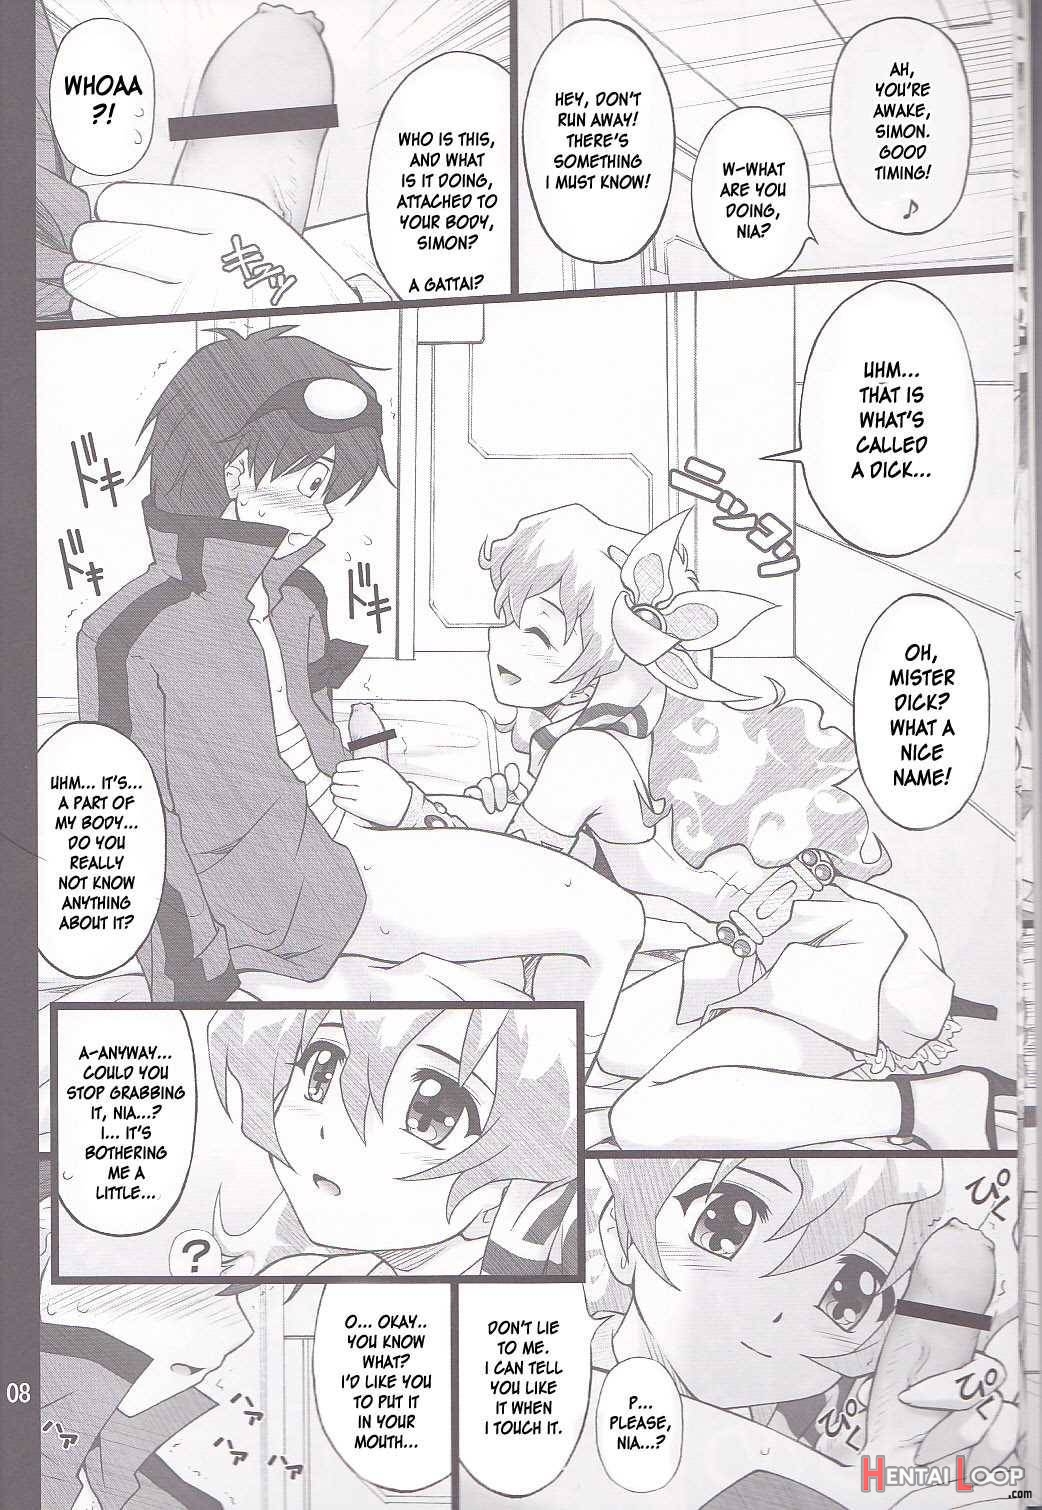 Oikari Nia-chan page 7